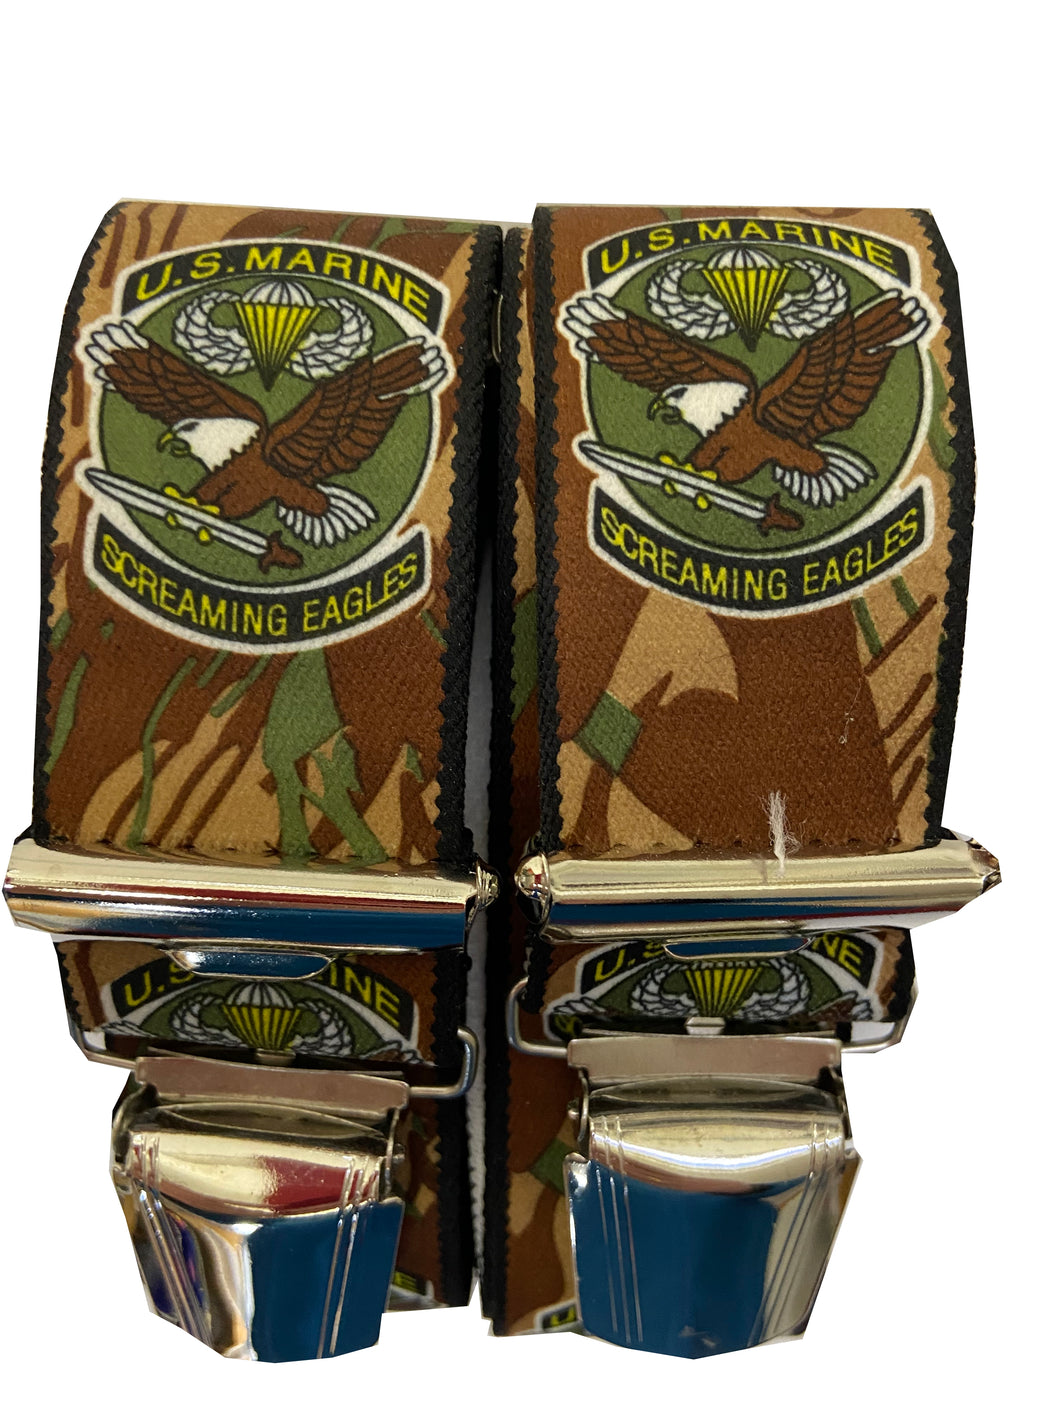 U.S. MARINE Hosenträger - Marines - Screaming Eagles - Adler (braun)